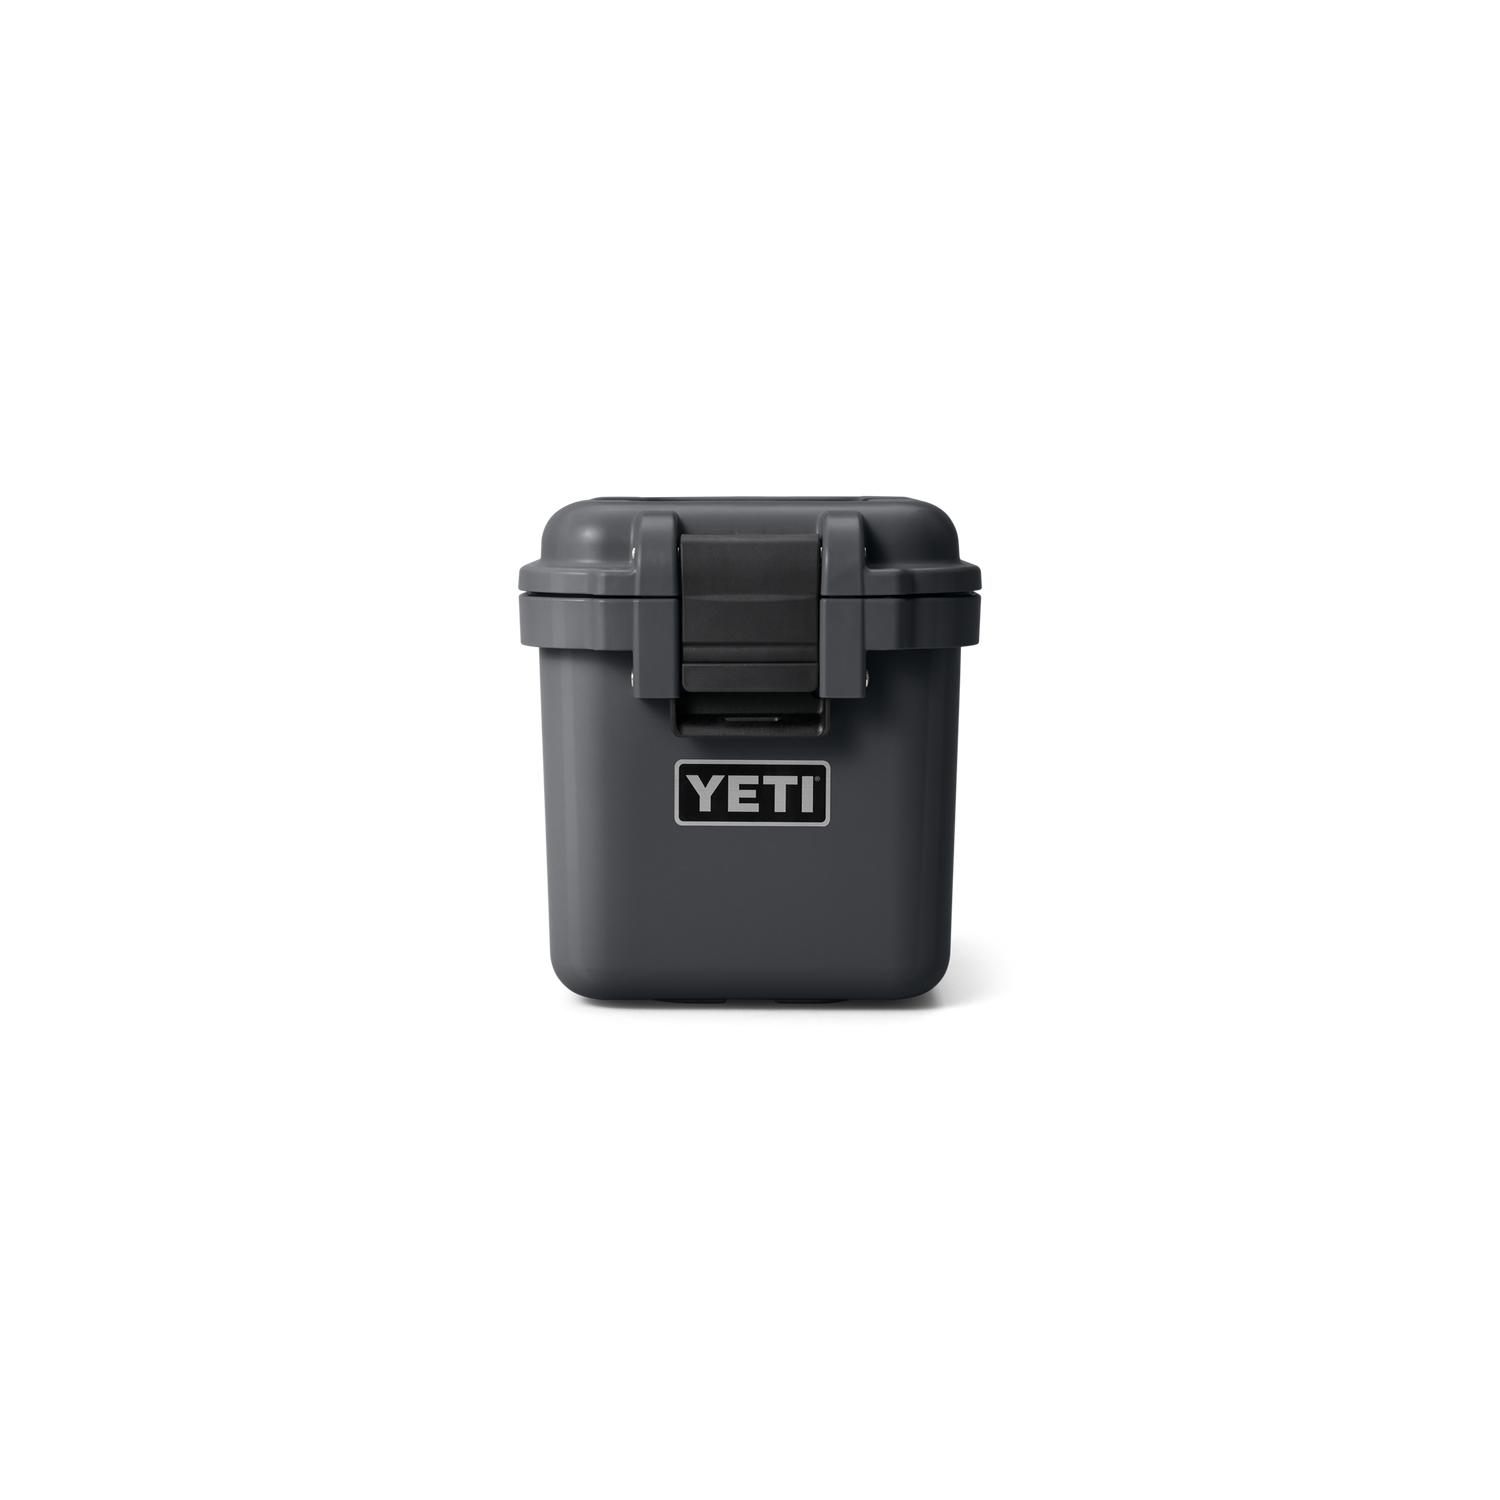 YETI 15 gear case Charcoal